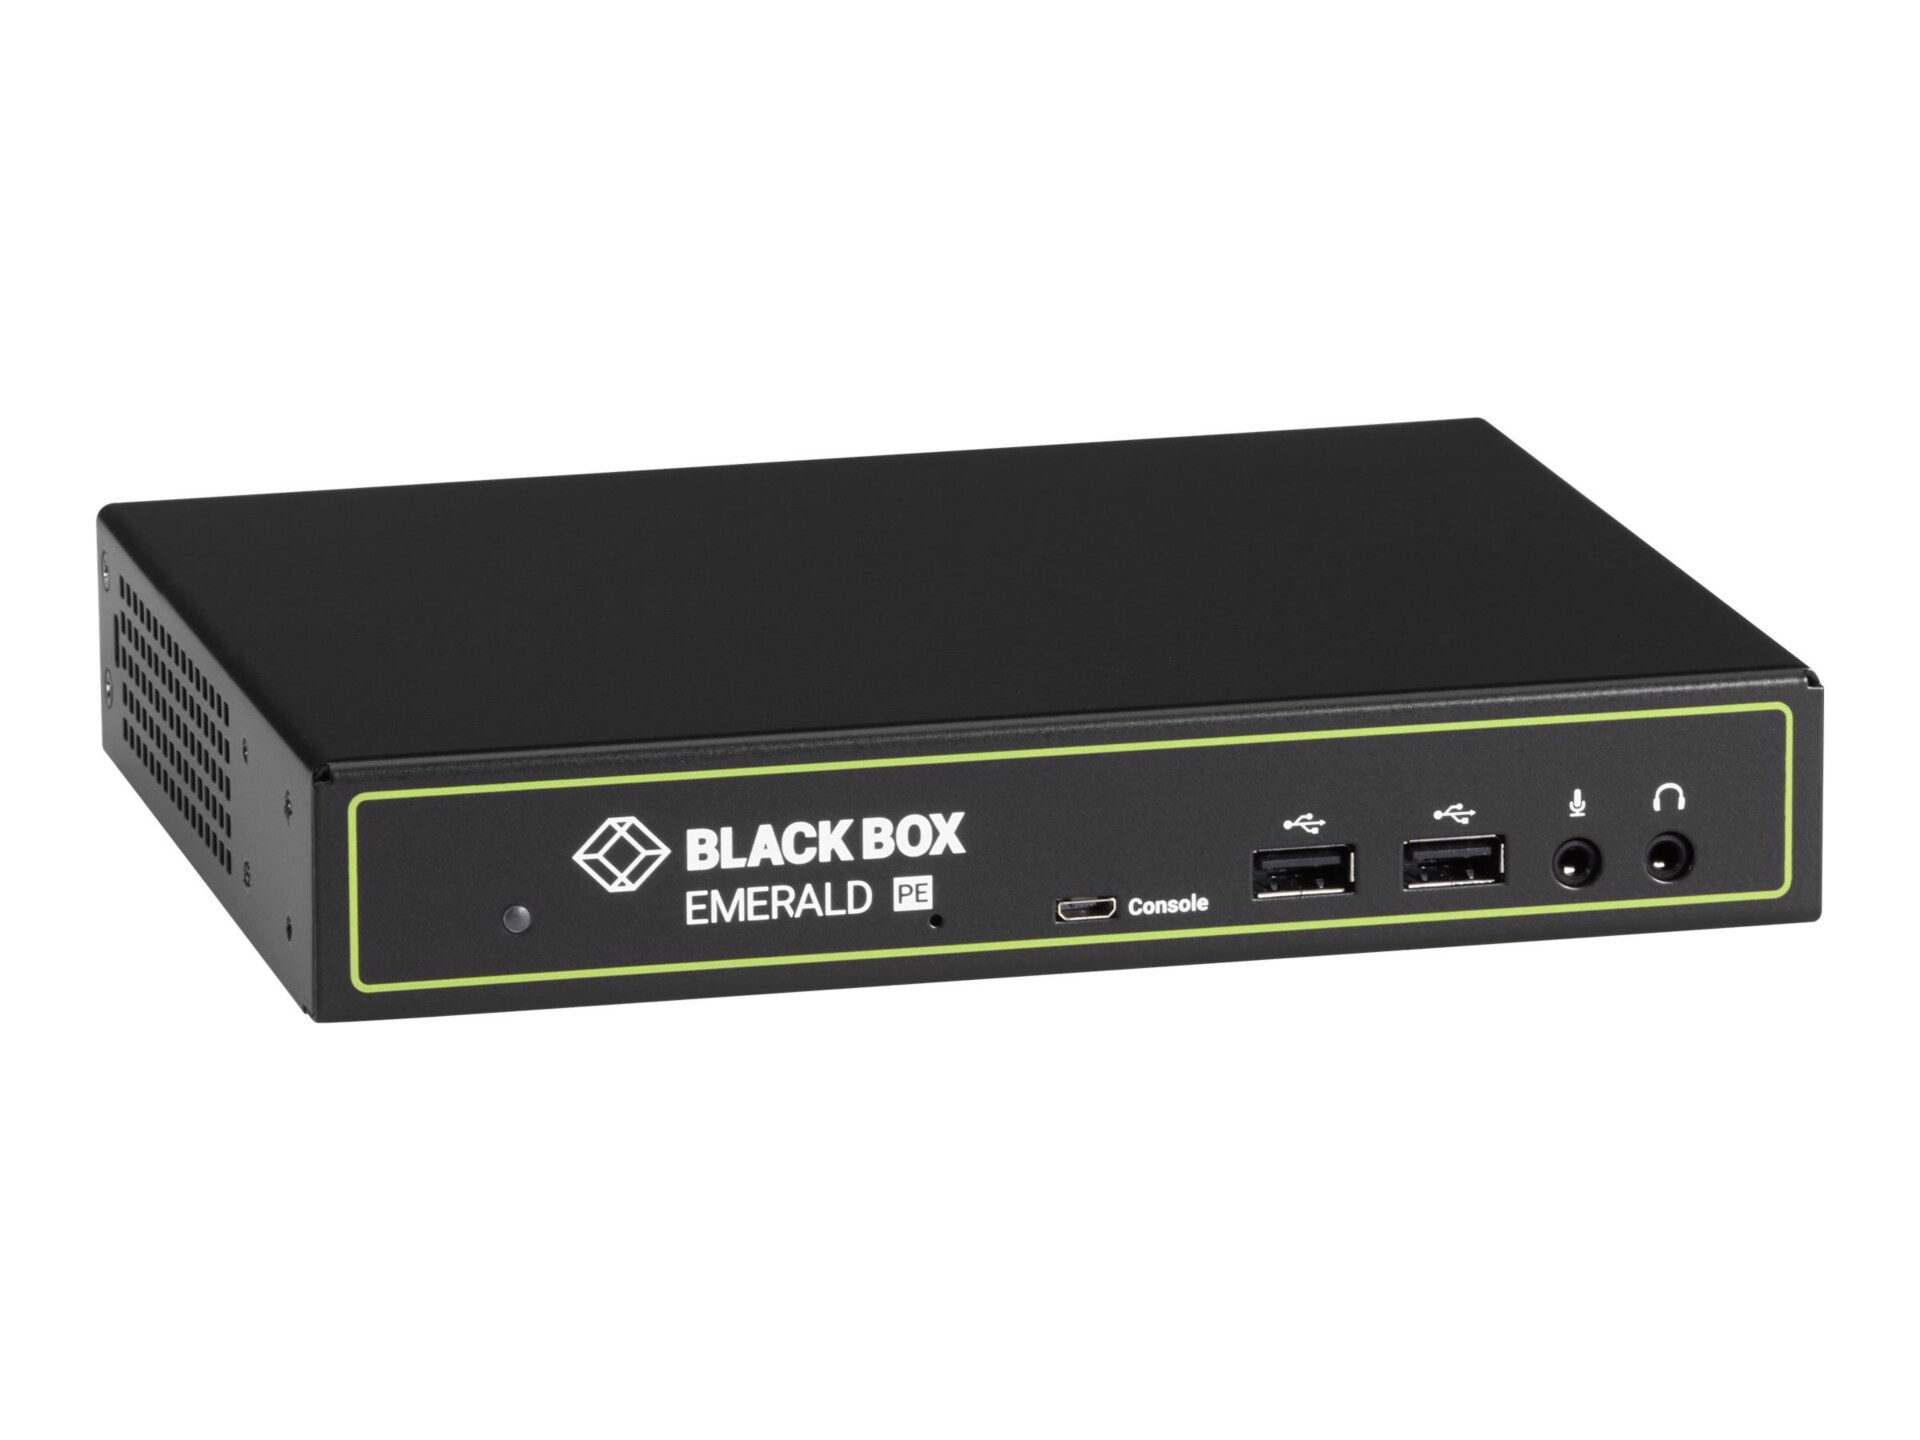 Black Box Emerald PE KVM Extender Receiver with Virtual Machine Access - Si